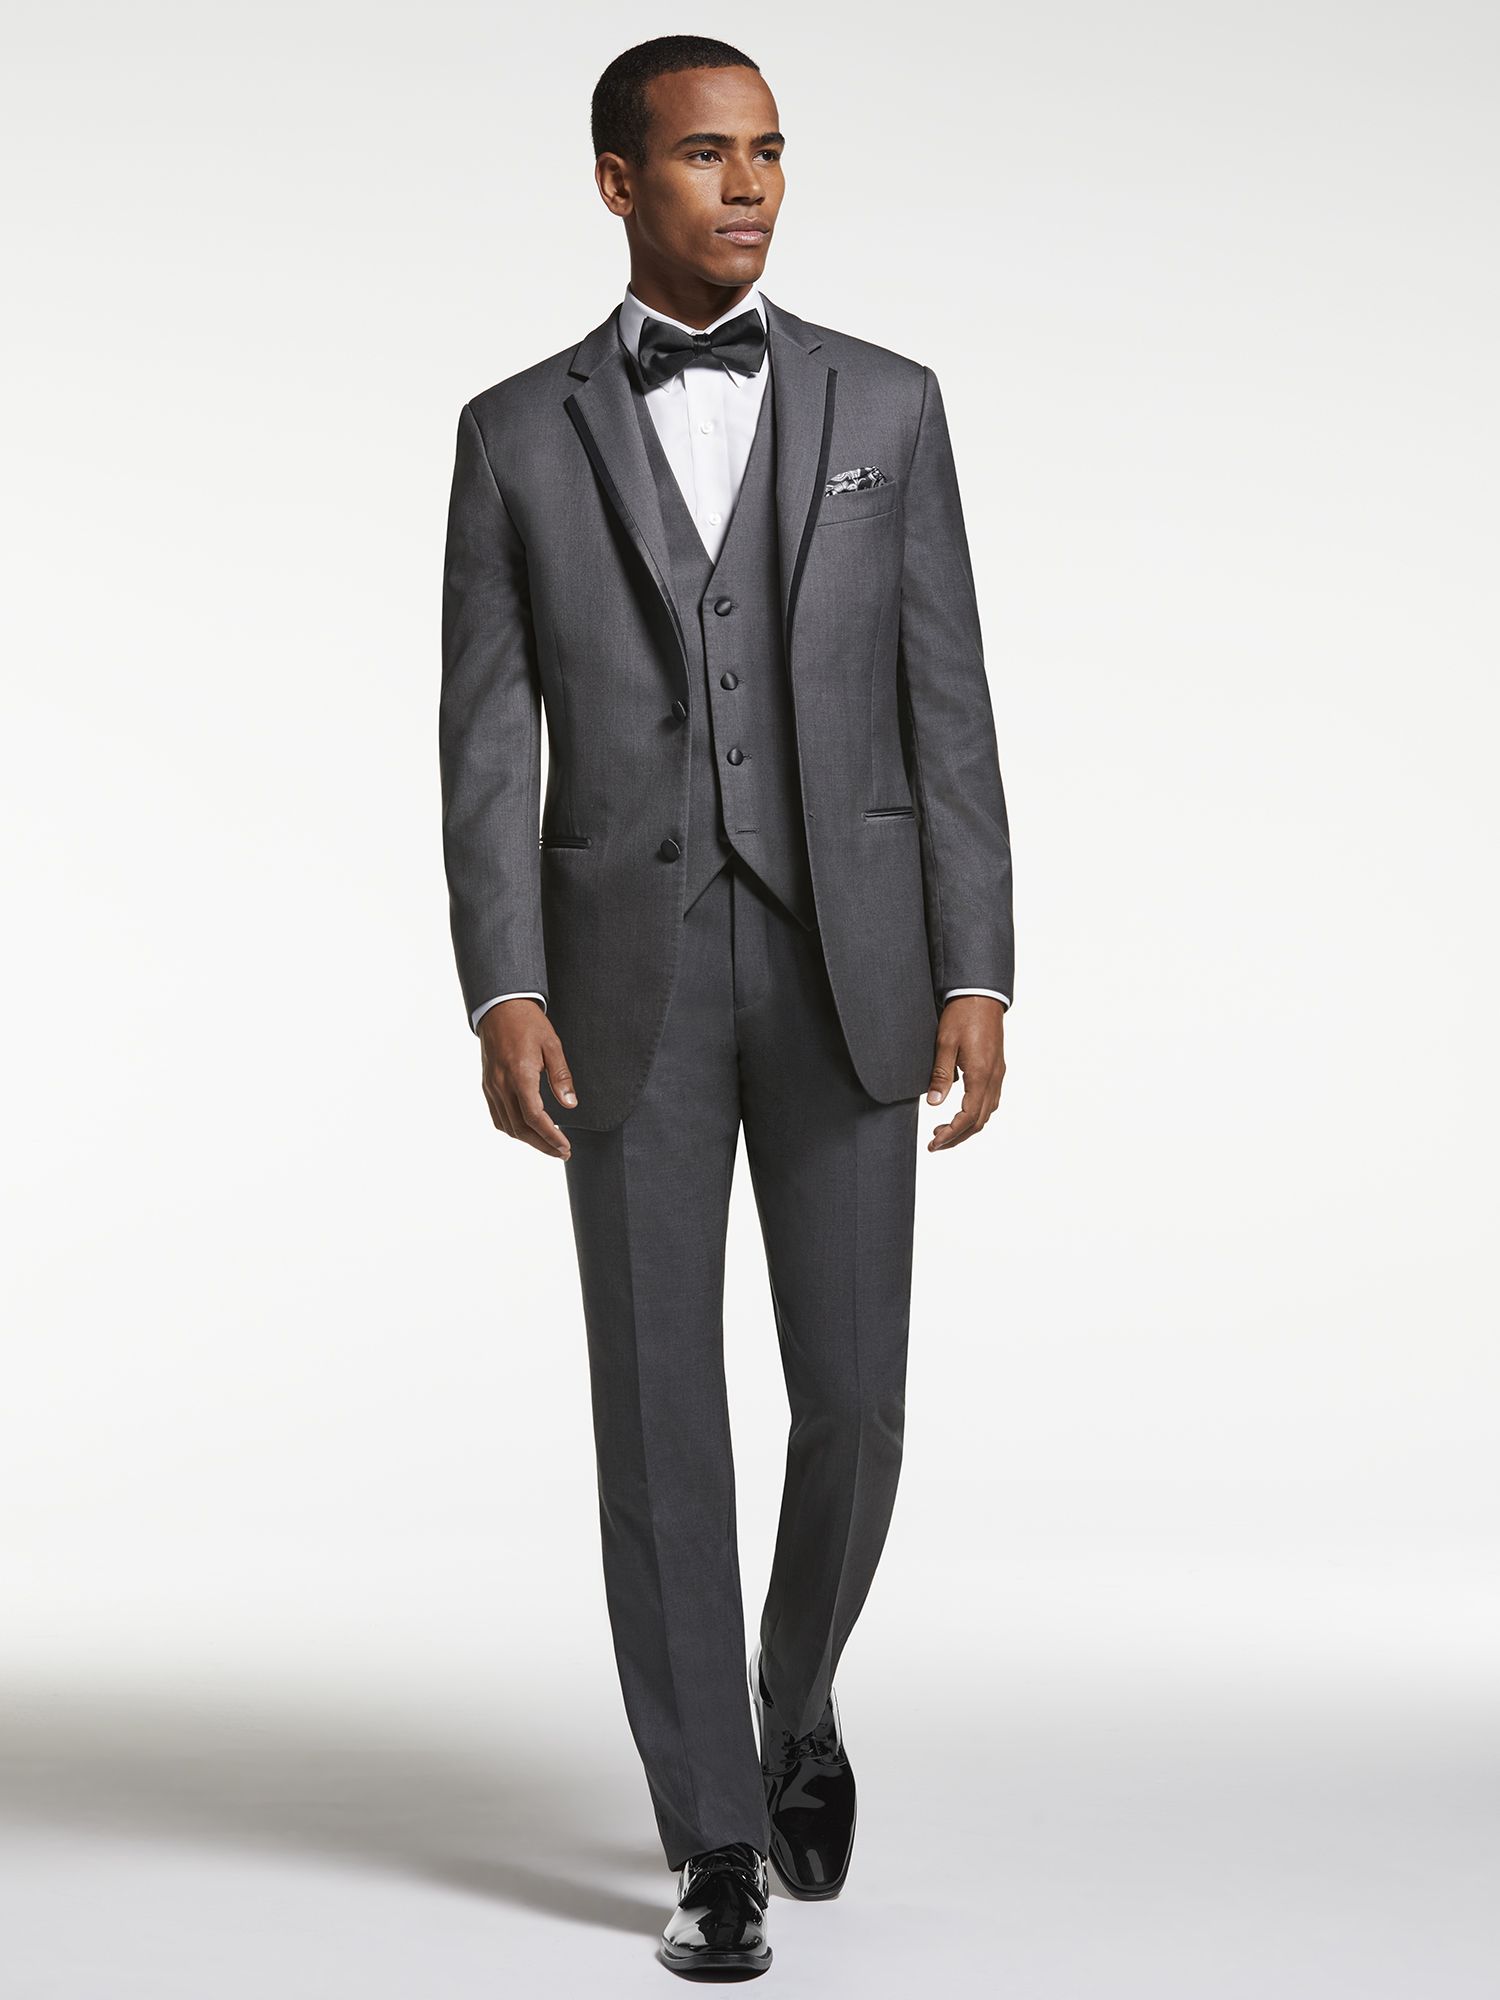 Black Shawl Lapel Tuxedo by Calvin Klein | Tuxedo Rental | Men's Wearhouse